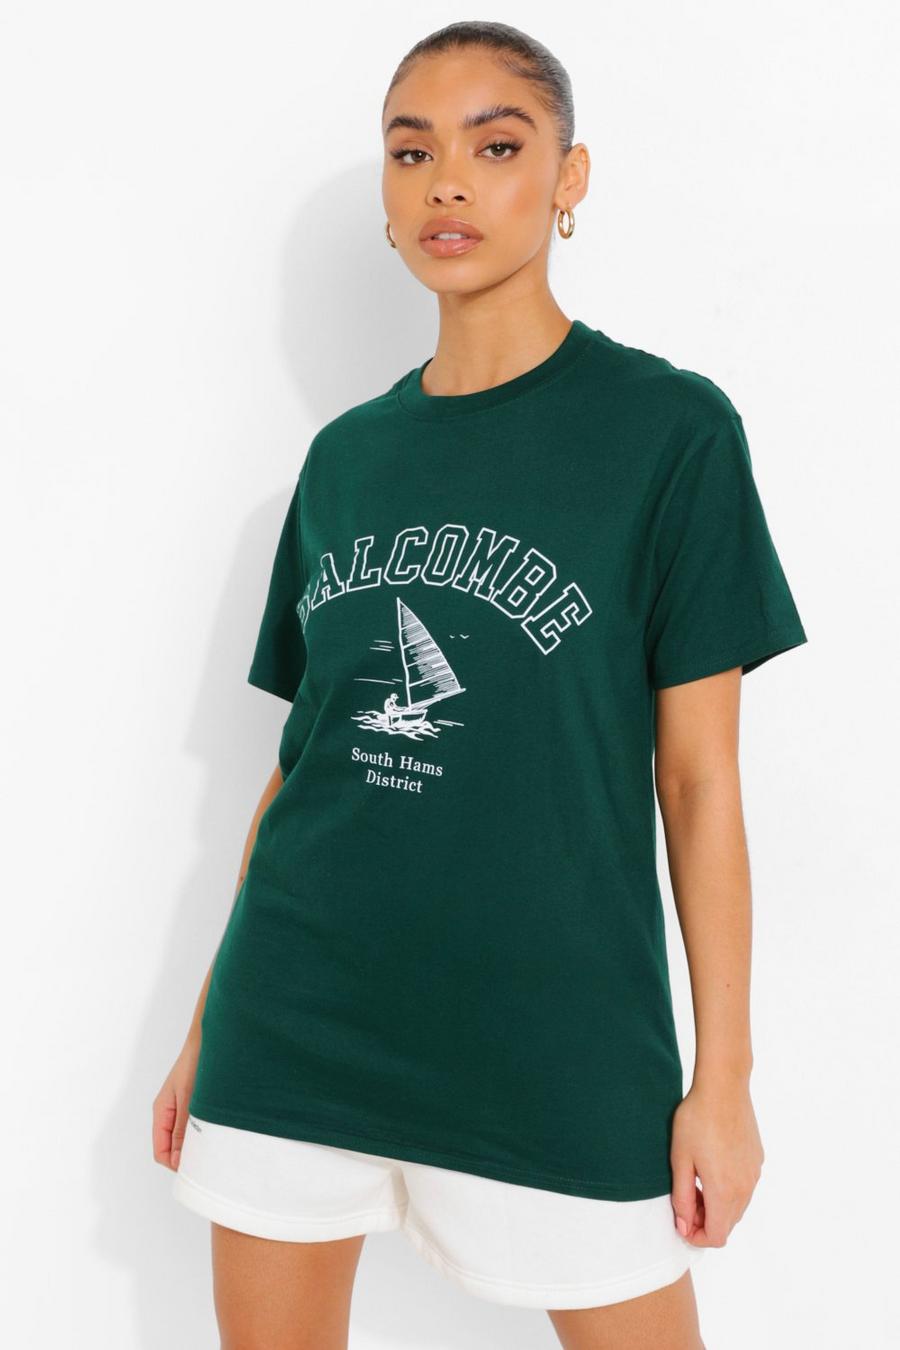 T-shirt Salcombe, Bottle green image number 1